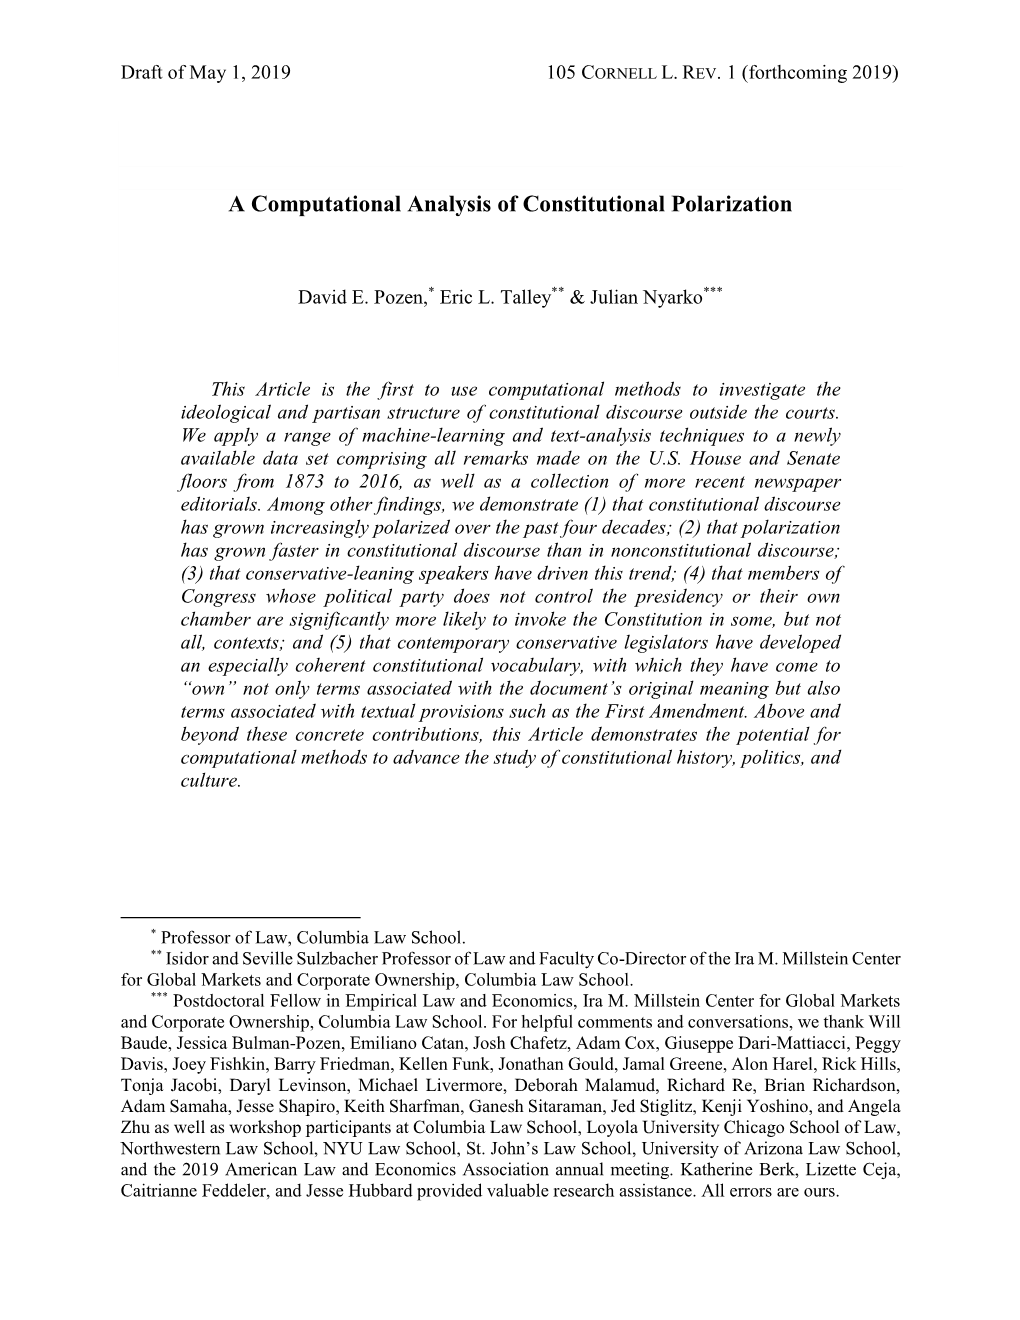 A Computational Analysis of Constitutional Polarization